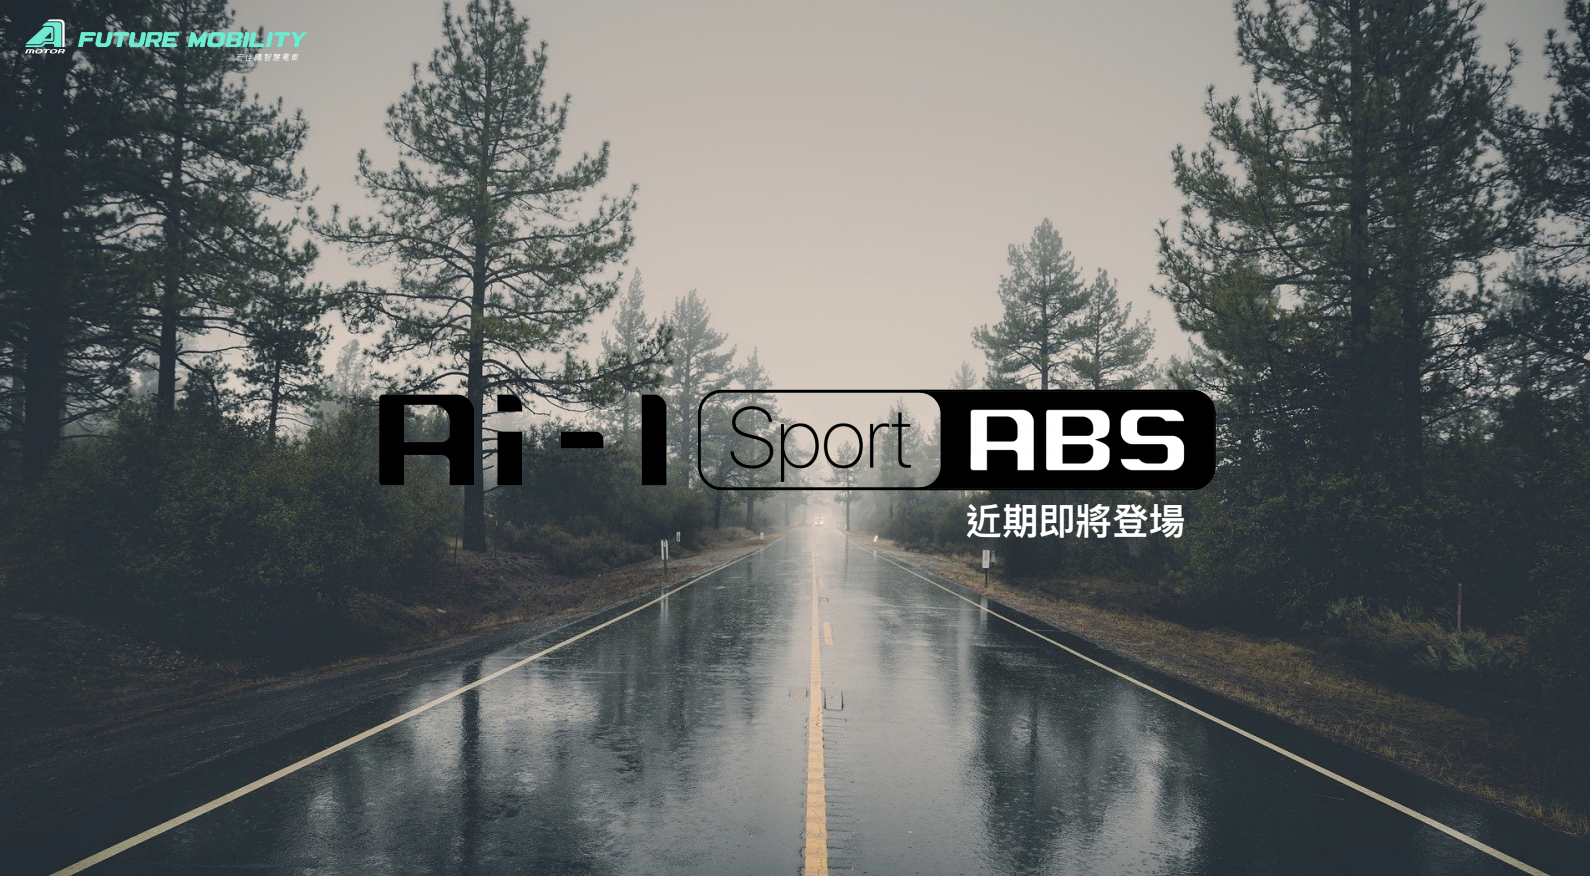 Ai-1 Sport ABS車款即將在近日登場